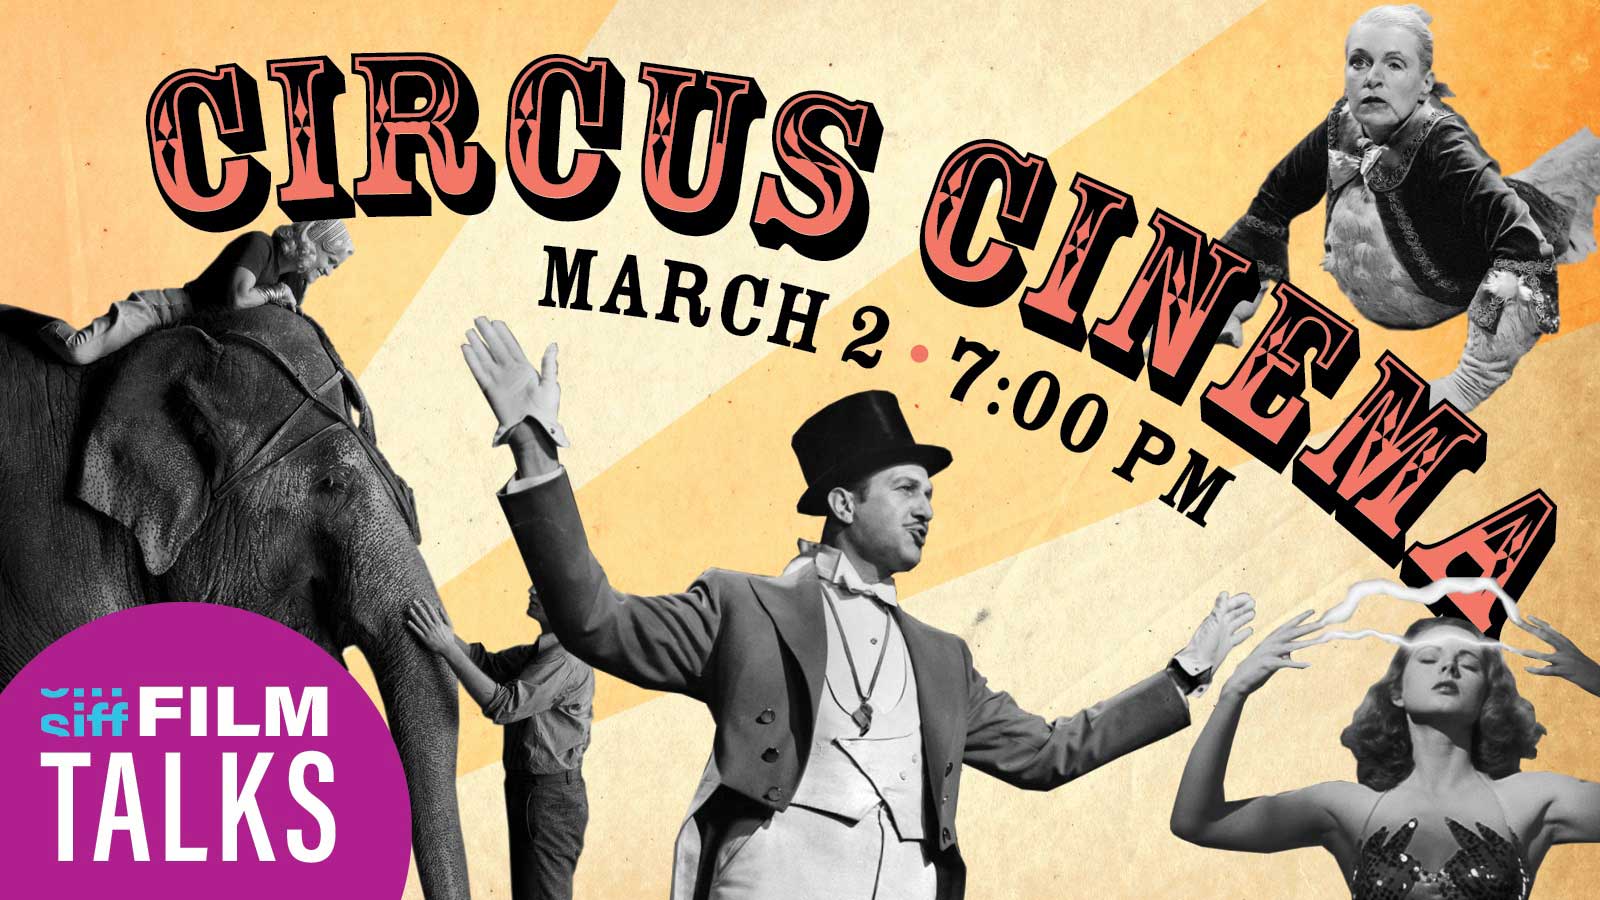 Circus Cinema